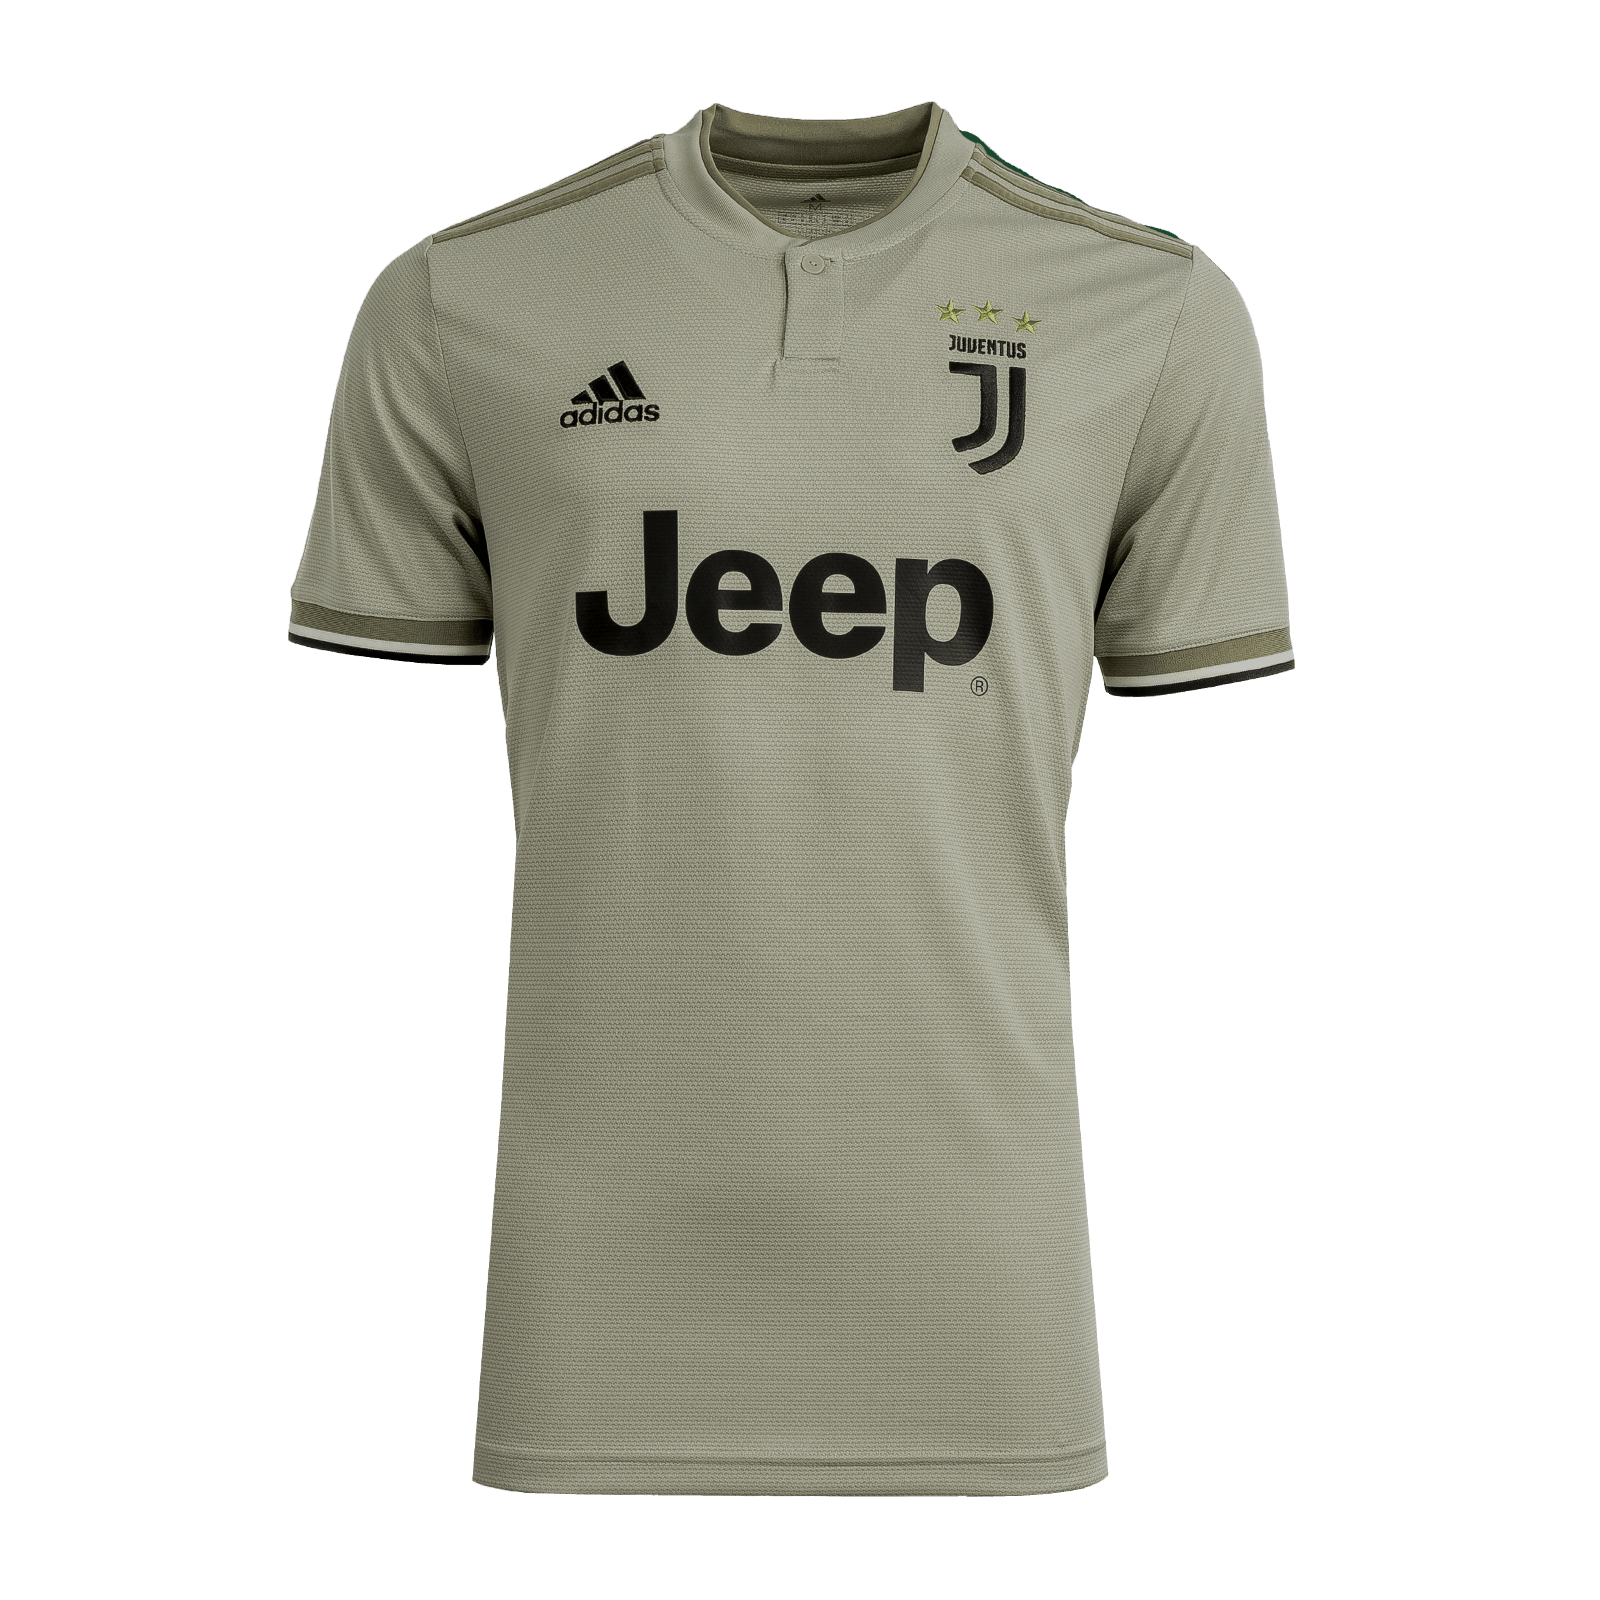 Juventus Adidas Away 2018 19 Fútbol Soccer Club Kit Calcio Shirt Football Jersey Fussball Camisa Trikot Maillot Maglia Bnwt